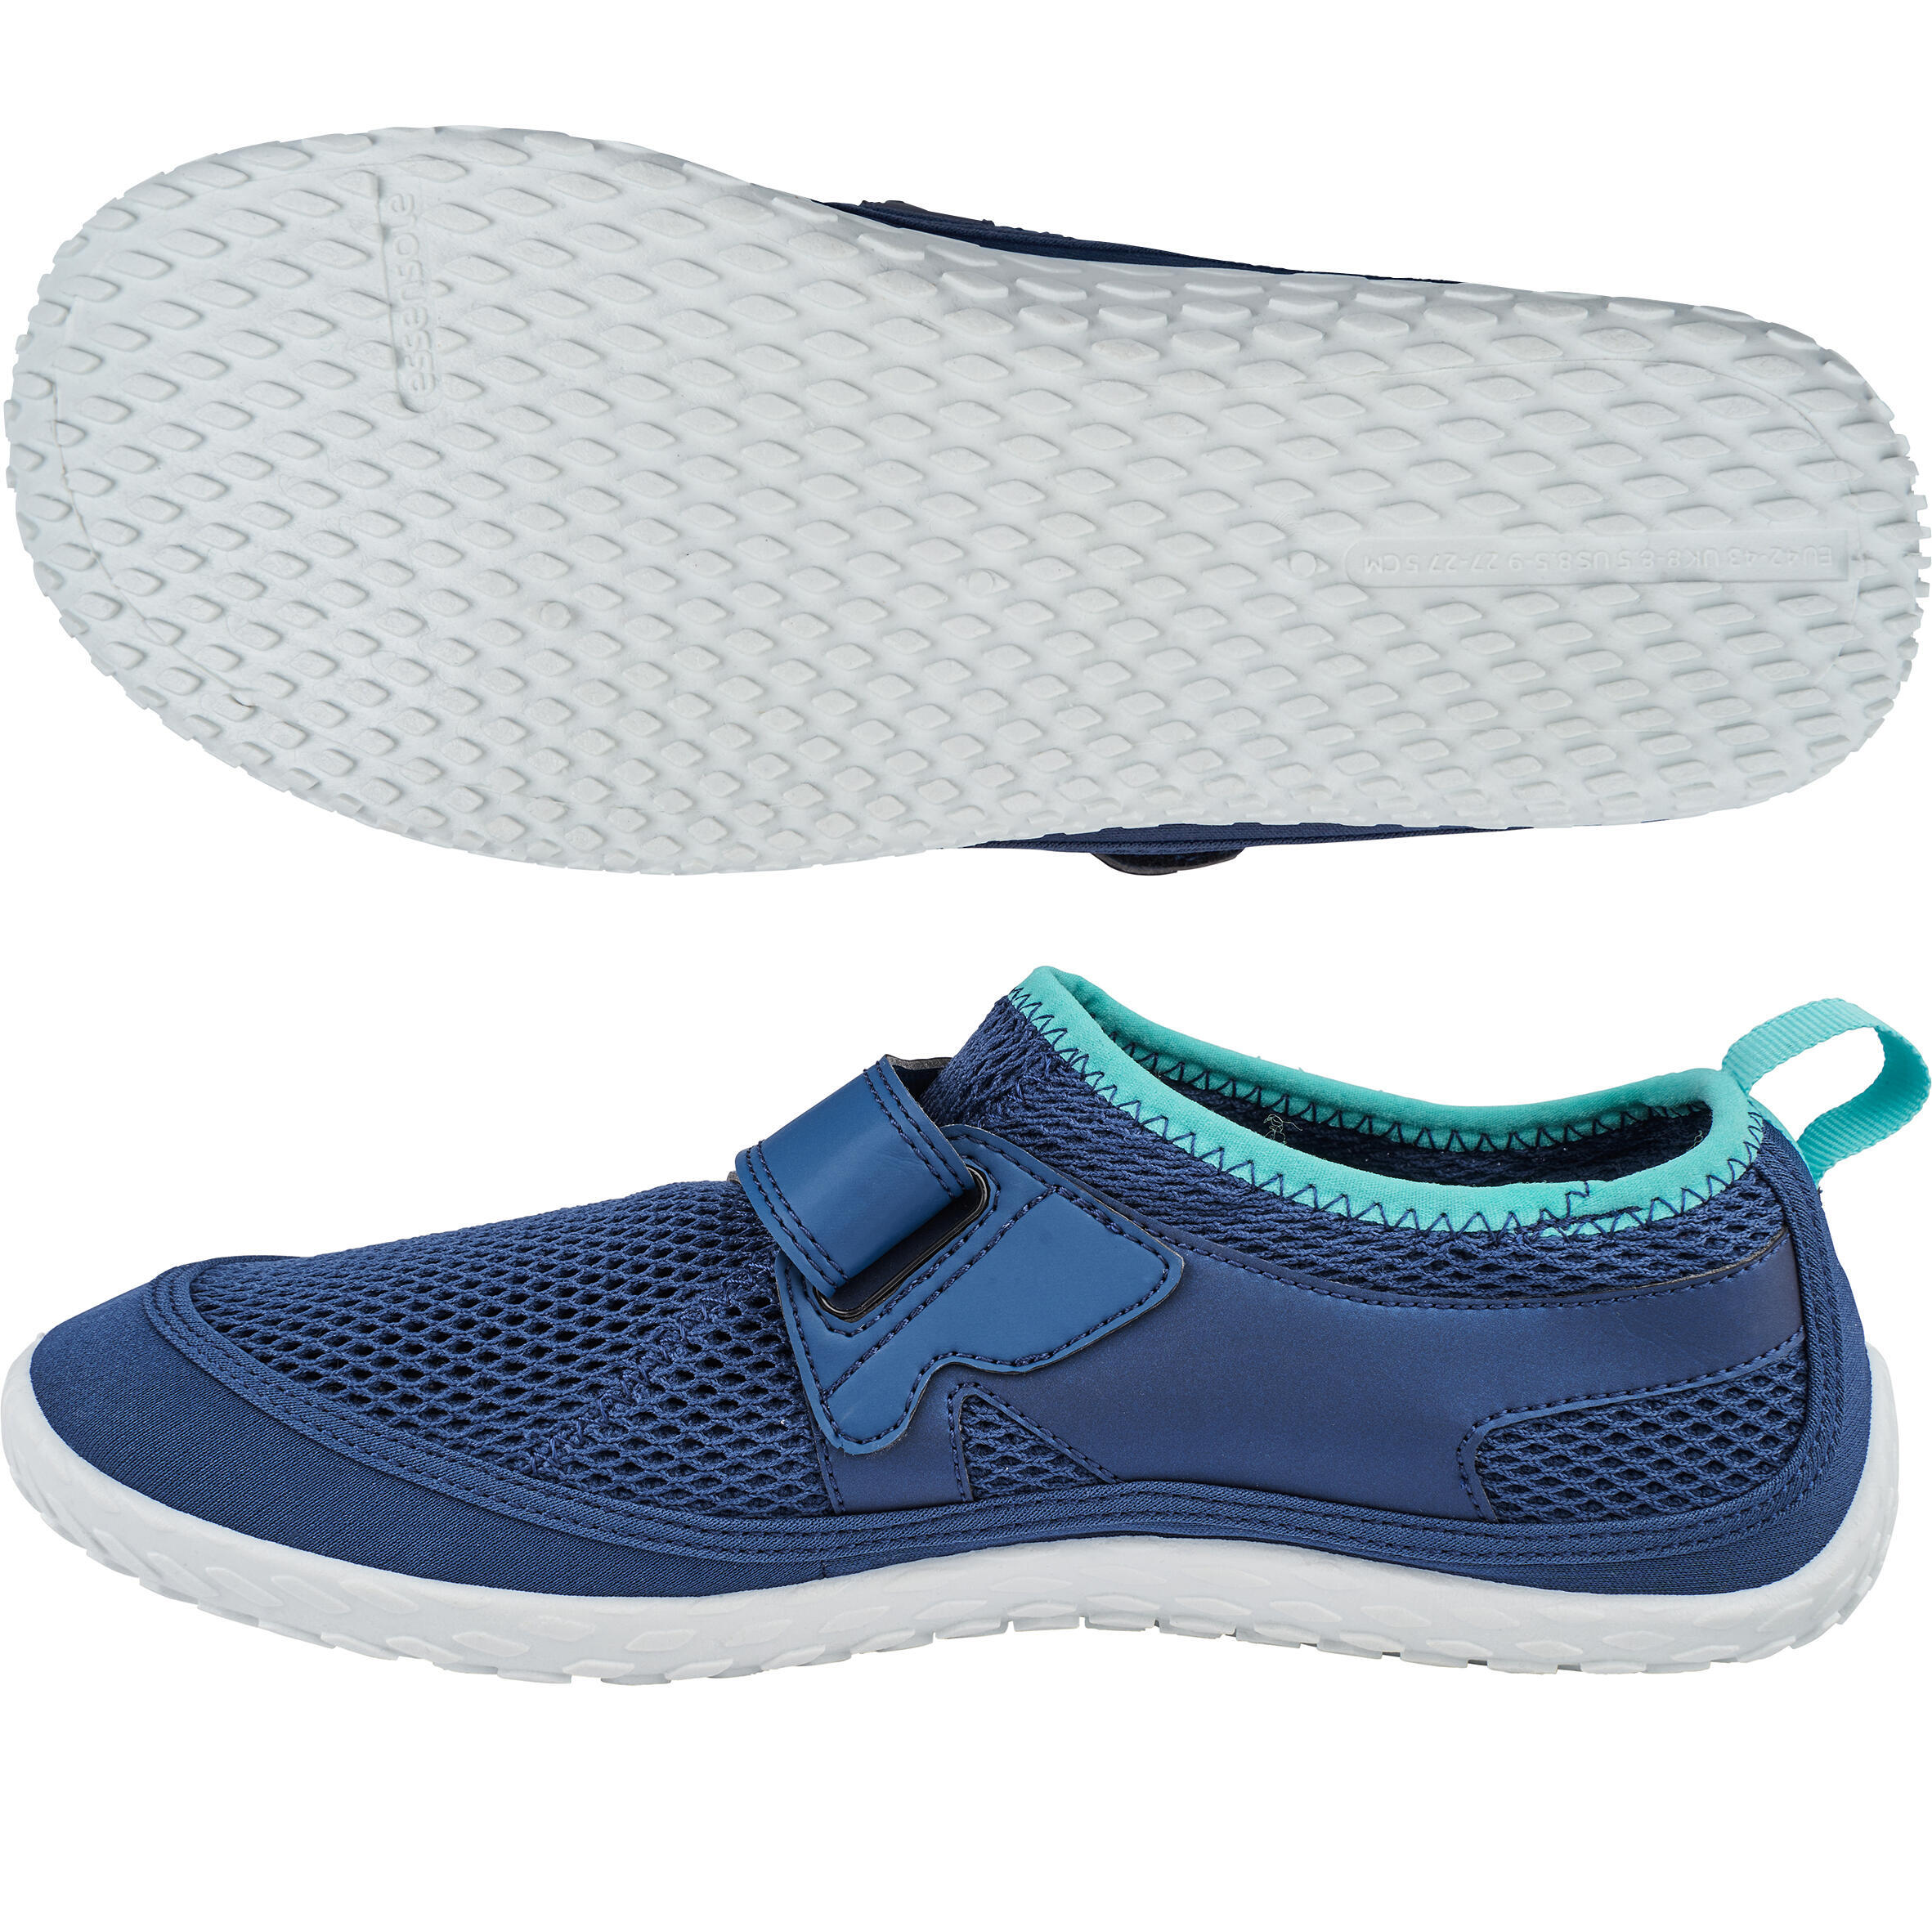 Rip tab Aquashoes for Adults - Aquashoes 500 - Turquoise 3/8